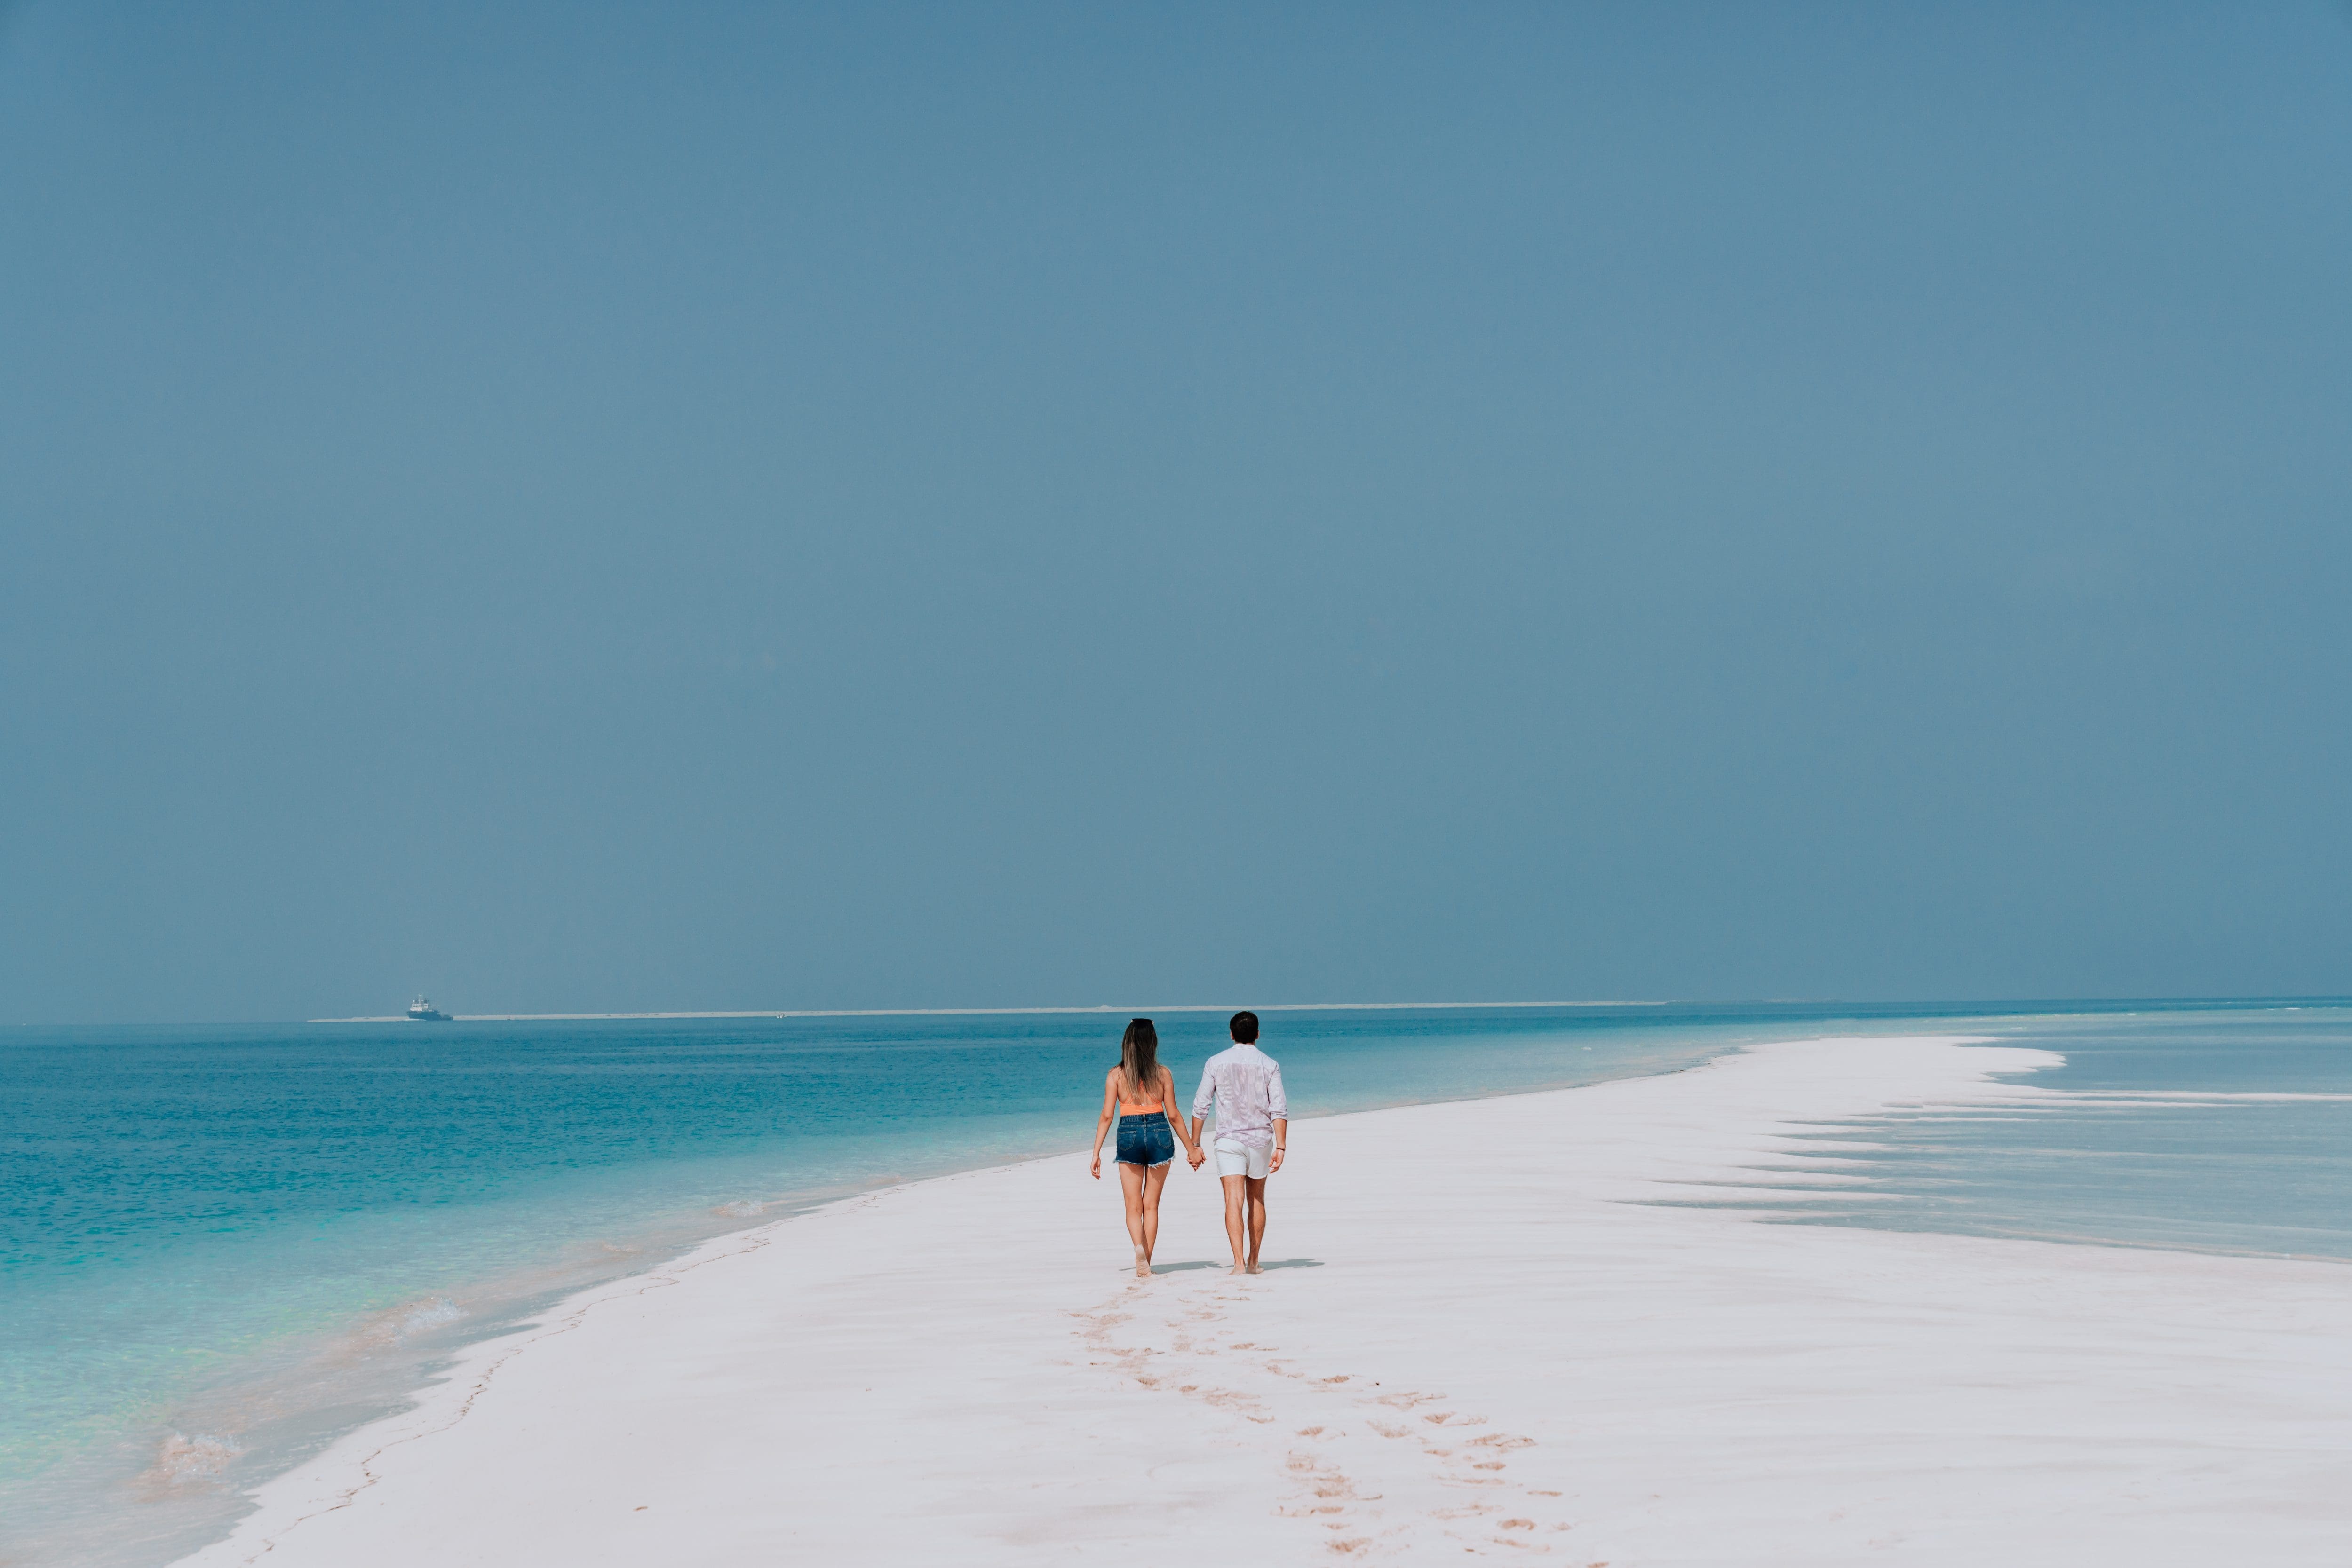 Couple walking on a sandbar in the ocean